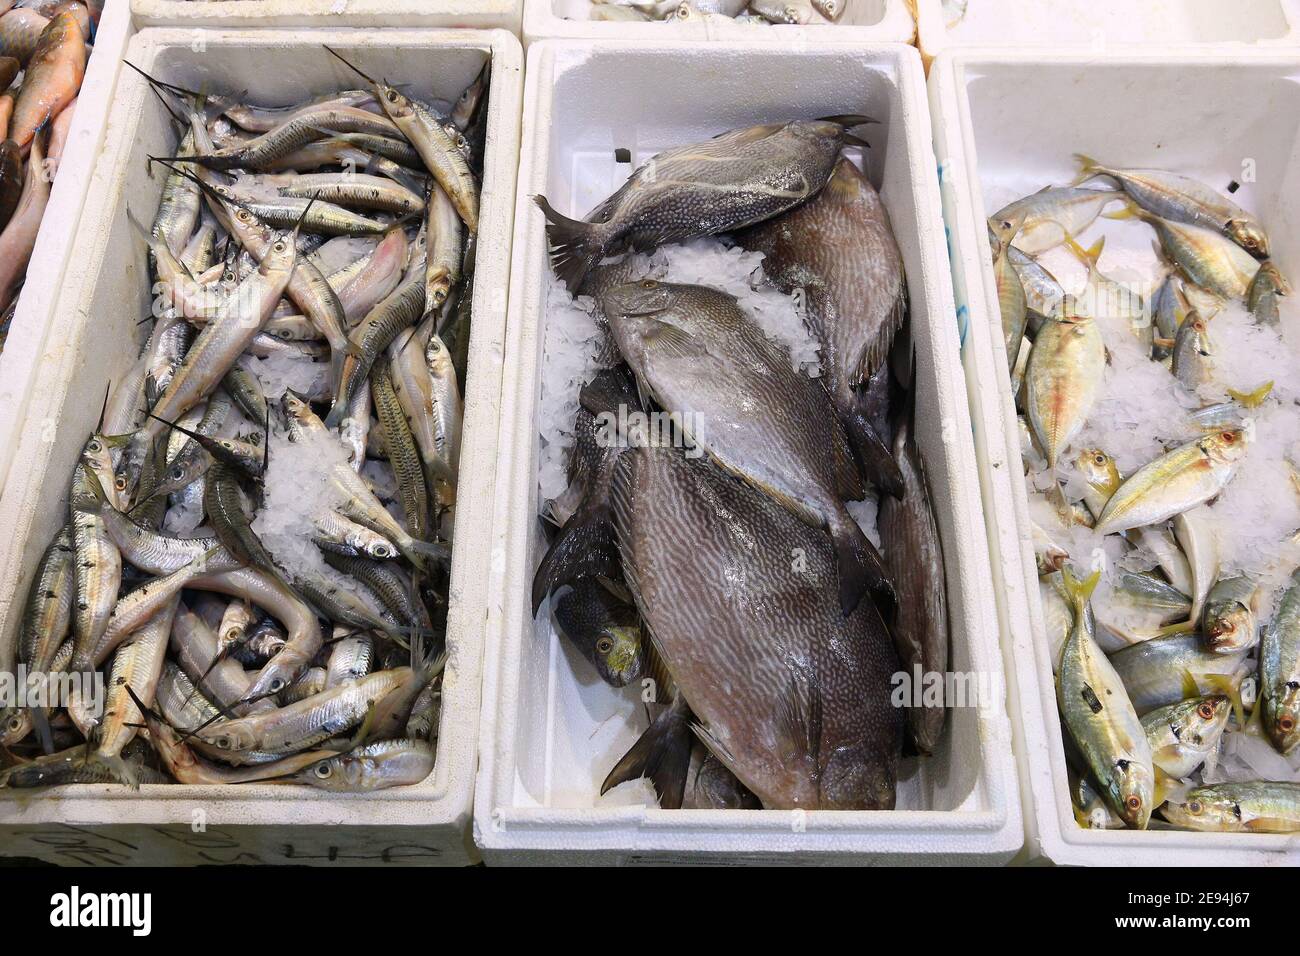 Halfbeak fish, rabbit fish and Atlantic horse mackerel at Billingsgate Fish Market in London, UK. Stock Photo